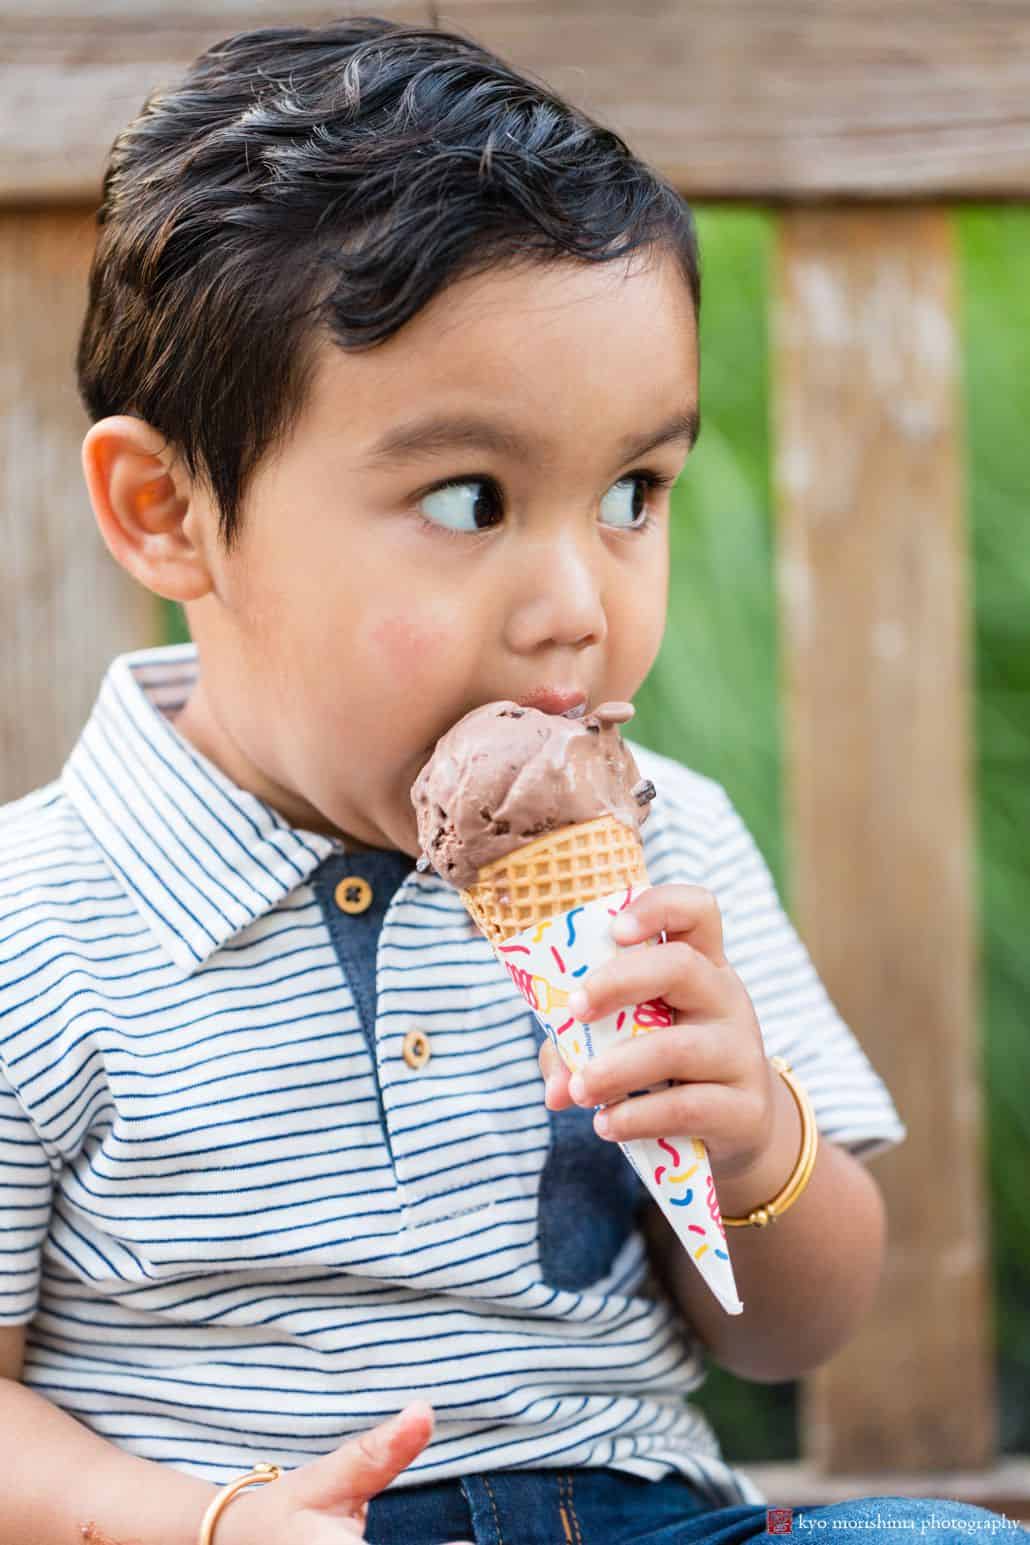 Enjoying a chocolate ice cream cone from Halo Farm: candid shot by Princeton kids photographer Kyo Morishima